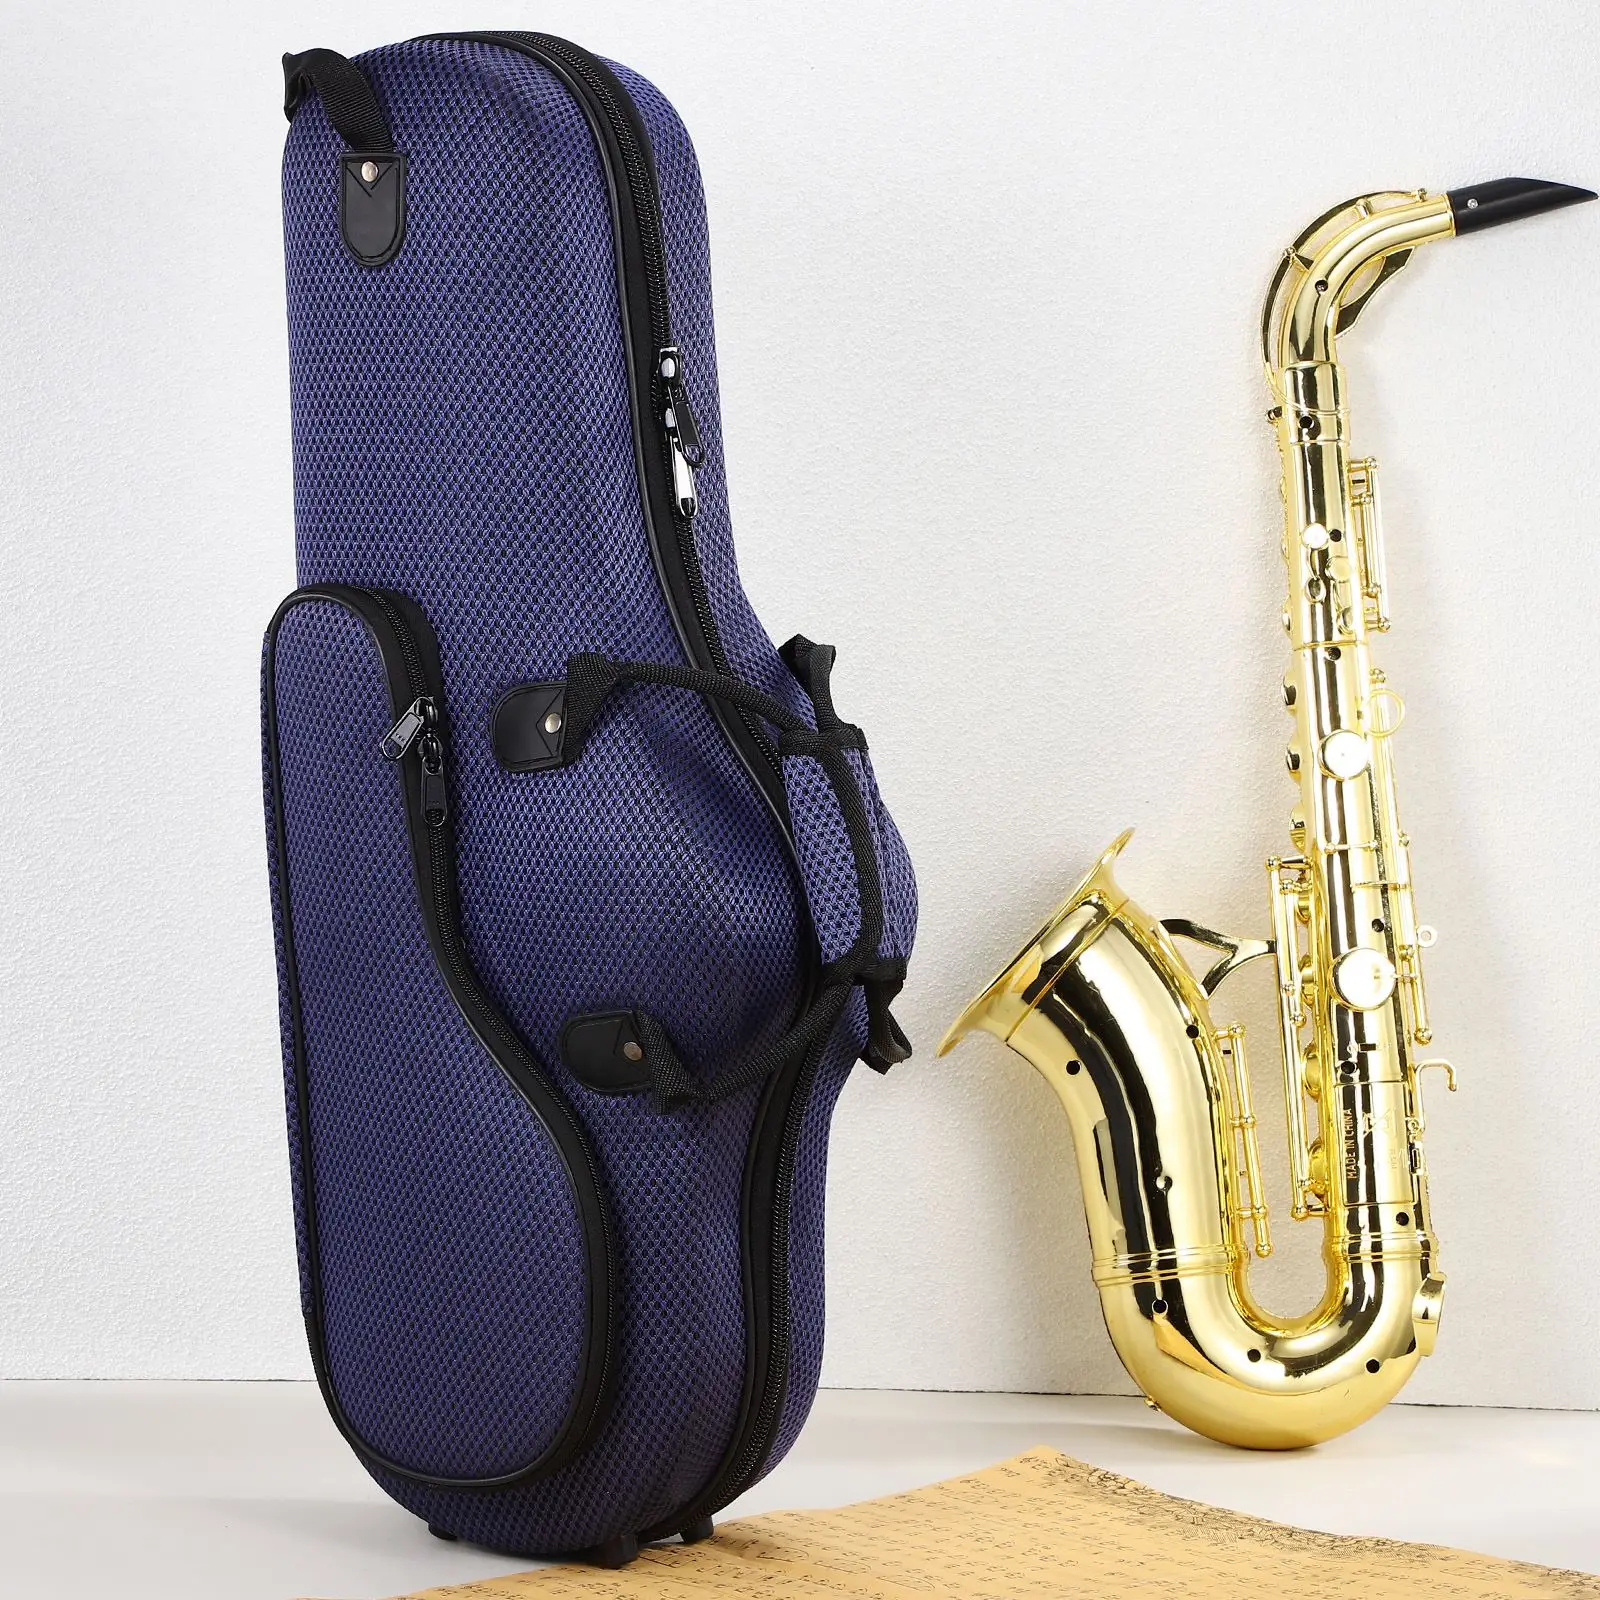 Universal Alto Saxophone Bag Ultralight Sax Carrying Backpack Saxophone Handbag shockproof Protect Saxophone Accessories enlarge